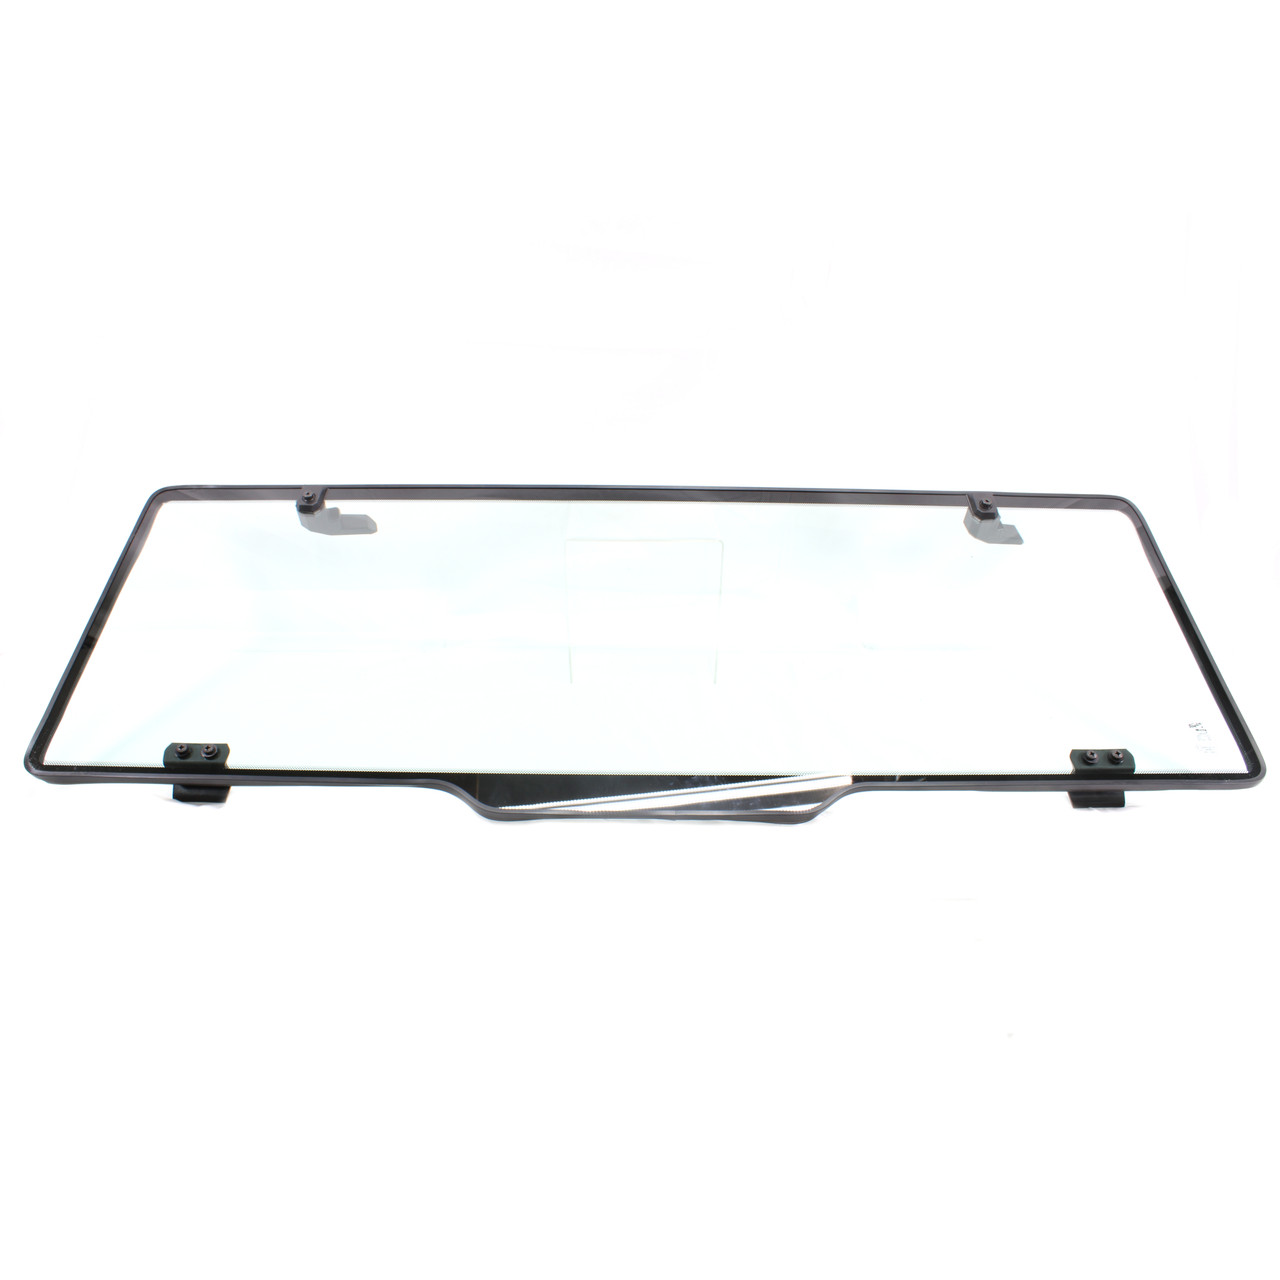 Polaris New OEM Pro Shield Glass Rear Panel with Lock & Ride Technology, 2879013